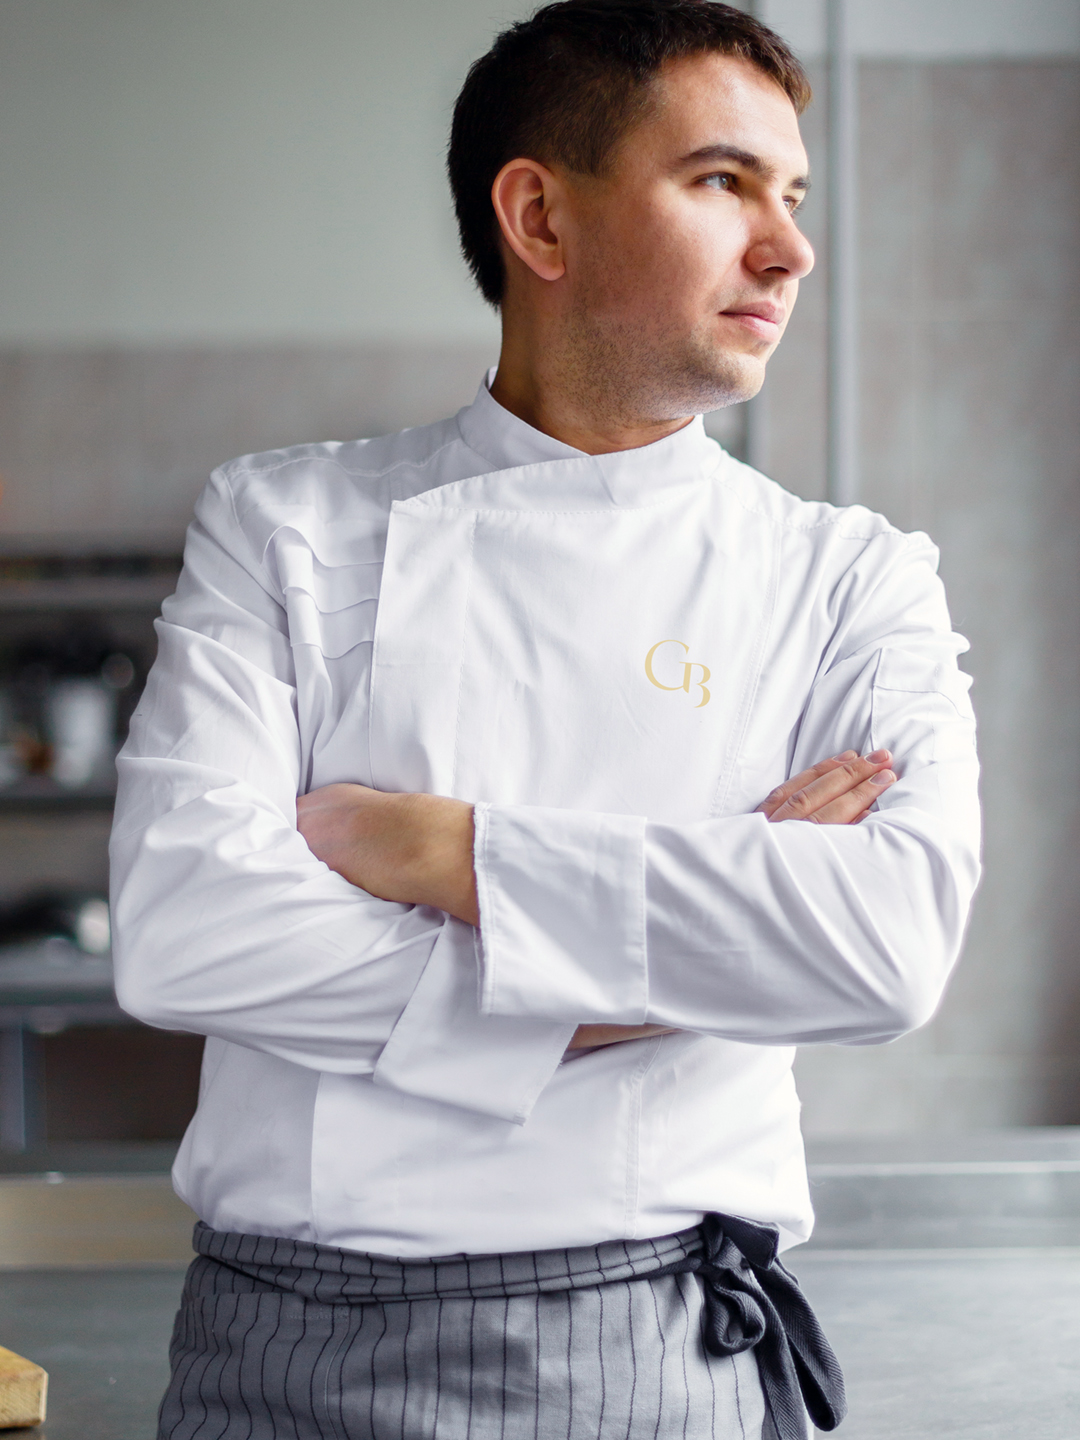 A chef wearing chef whites featuring the Chez Burton brand mark design.